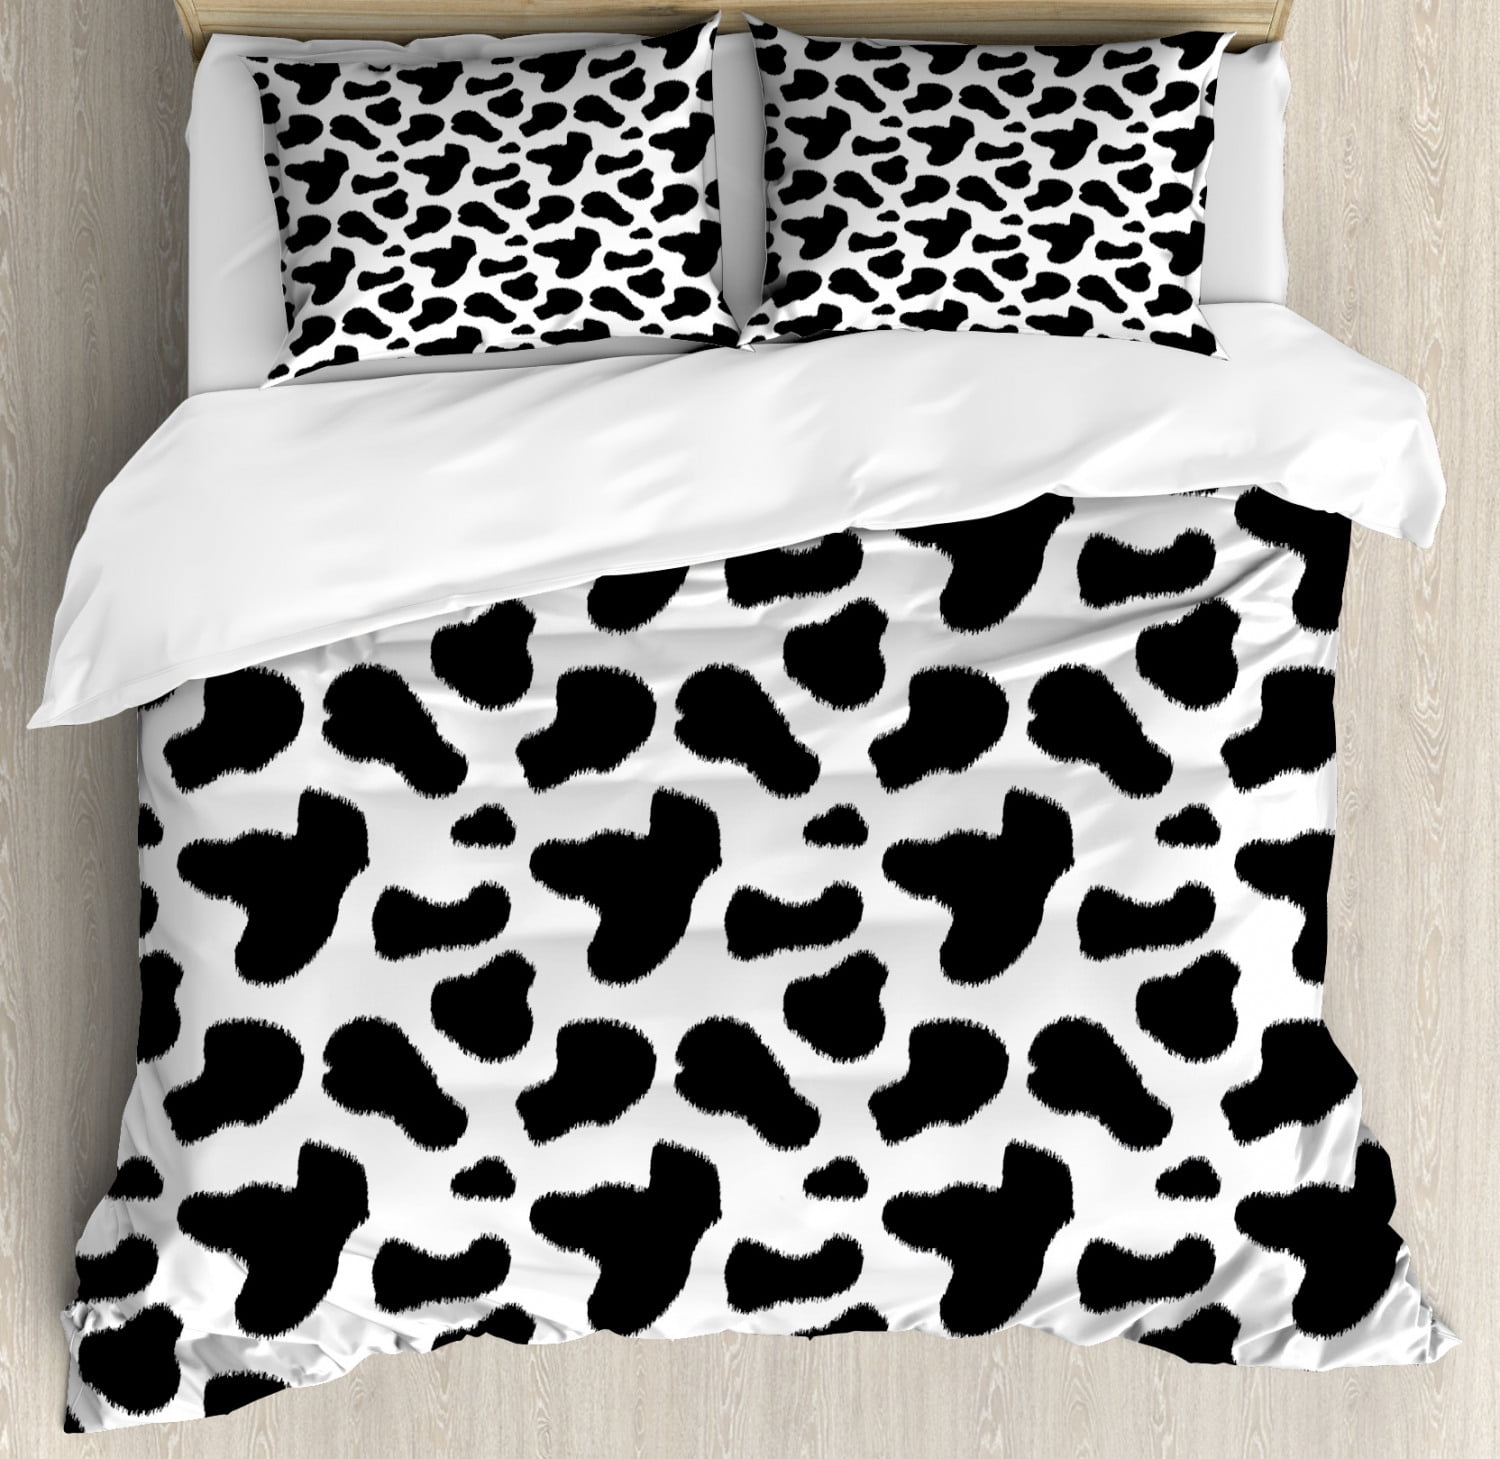 Cute cow Print,Duvet Cover Set Quilt Bedspread for Childrens/Kids/Teens/Adults 4 Piece Bedding Set Queen Size 